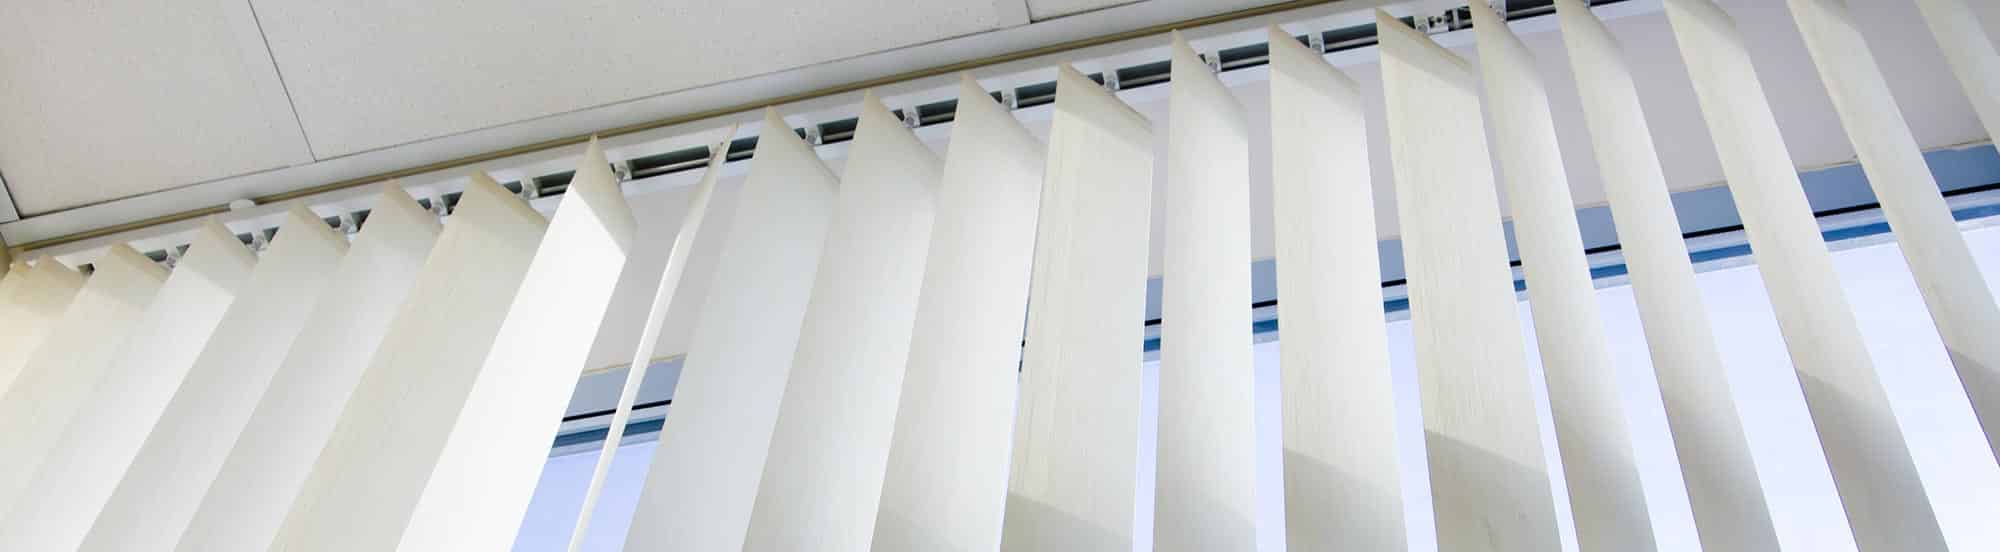 Vertikaljalousie Ersatzlamellen Lamellen Stoffmuster für Lamellenvorhang 